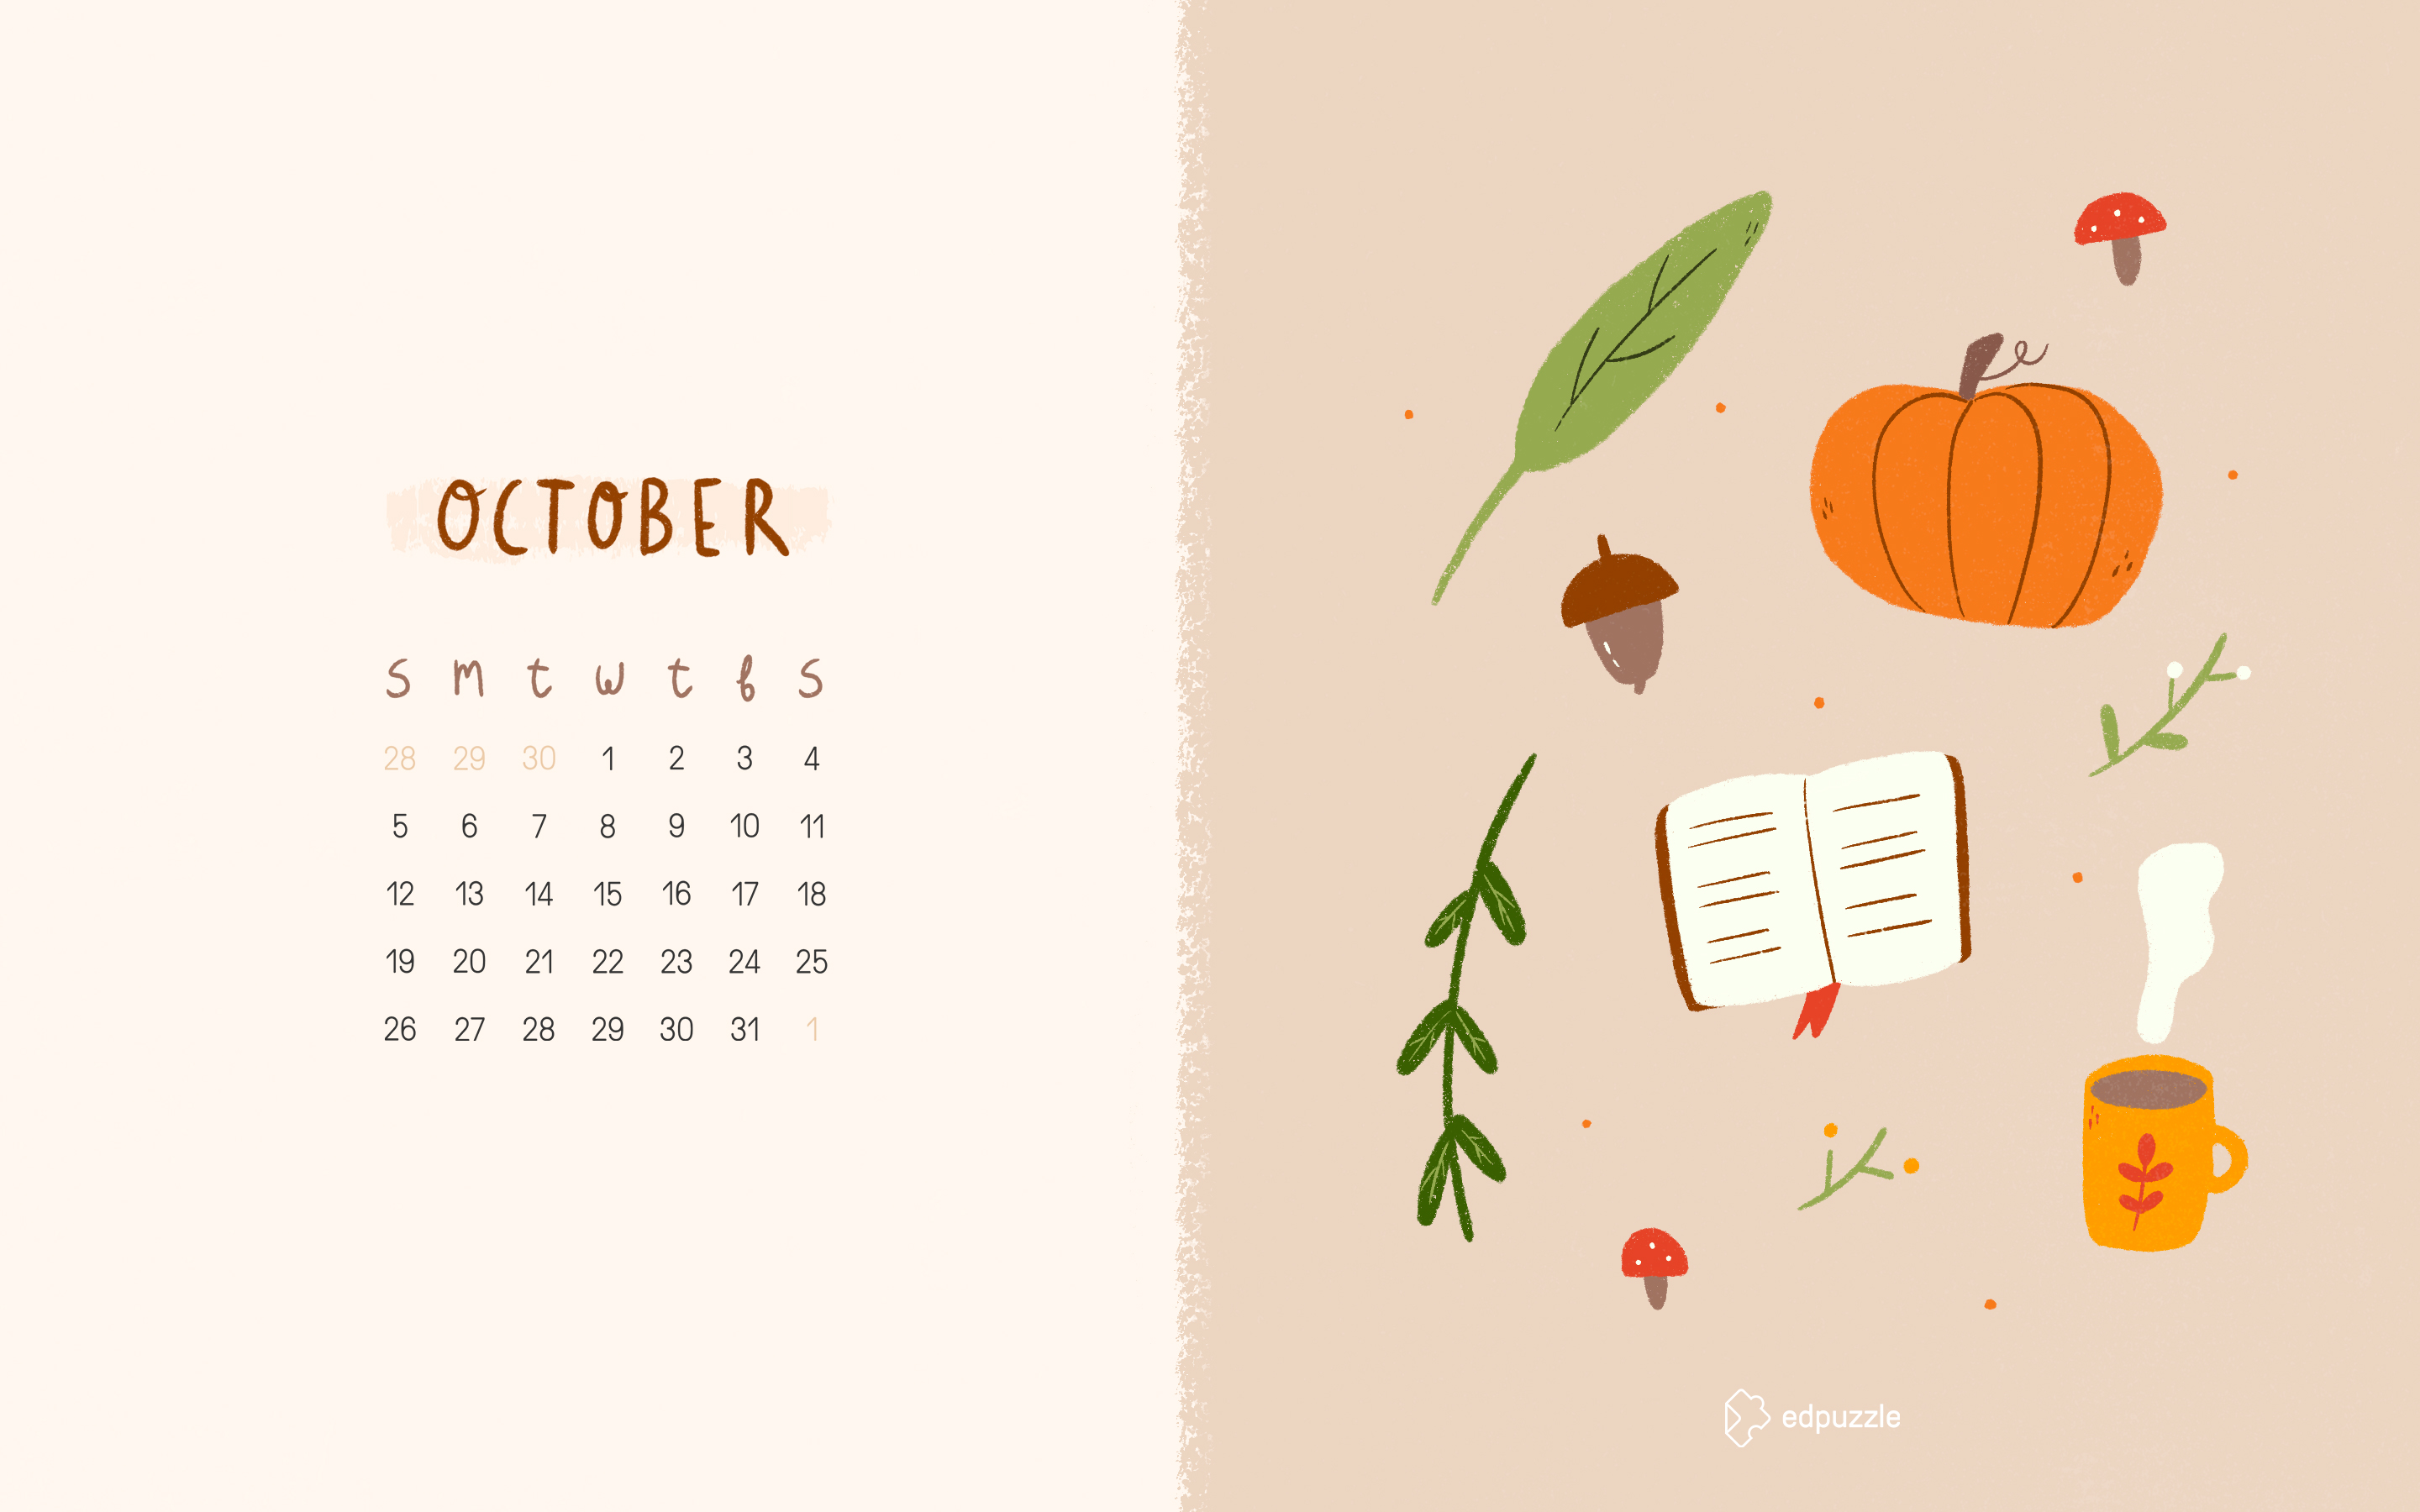 October Calendar Wallpaper Edpuzzle